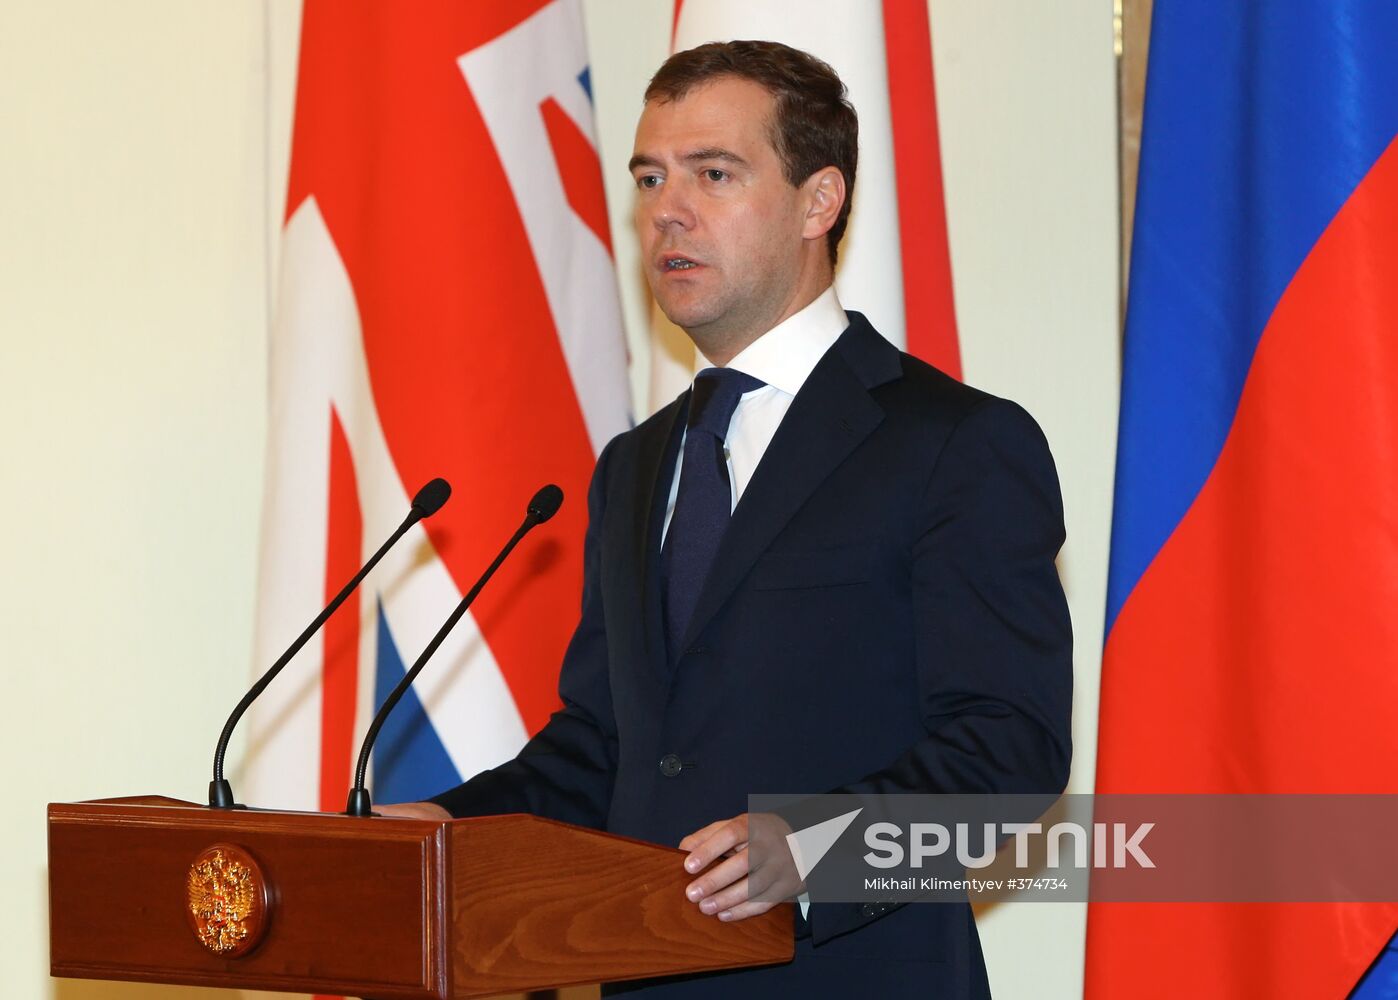 Dmitry Medvedev meets with business leaders in Sakhalin Region